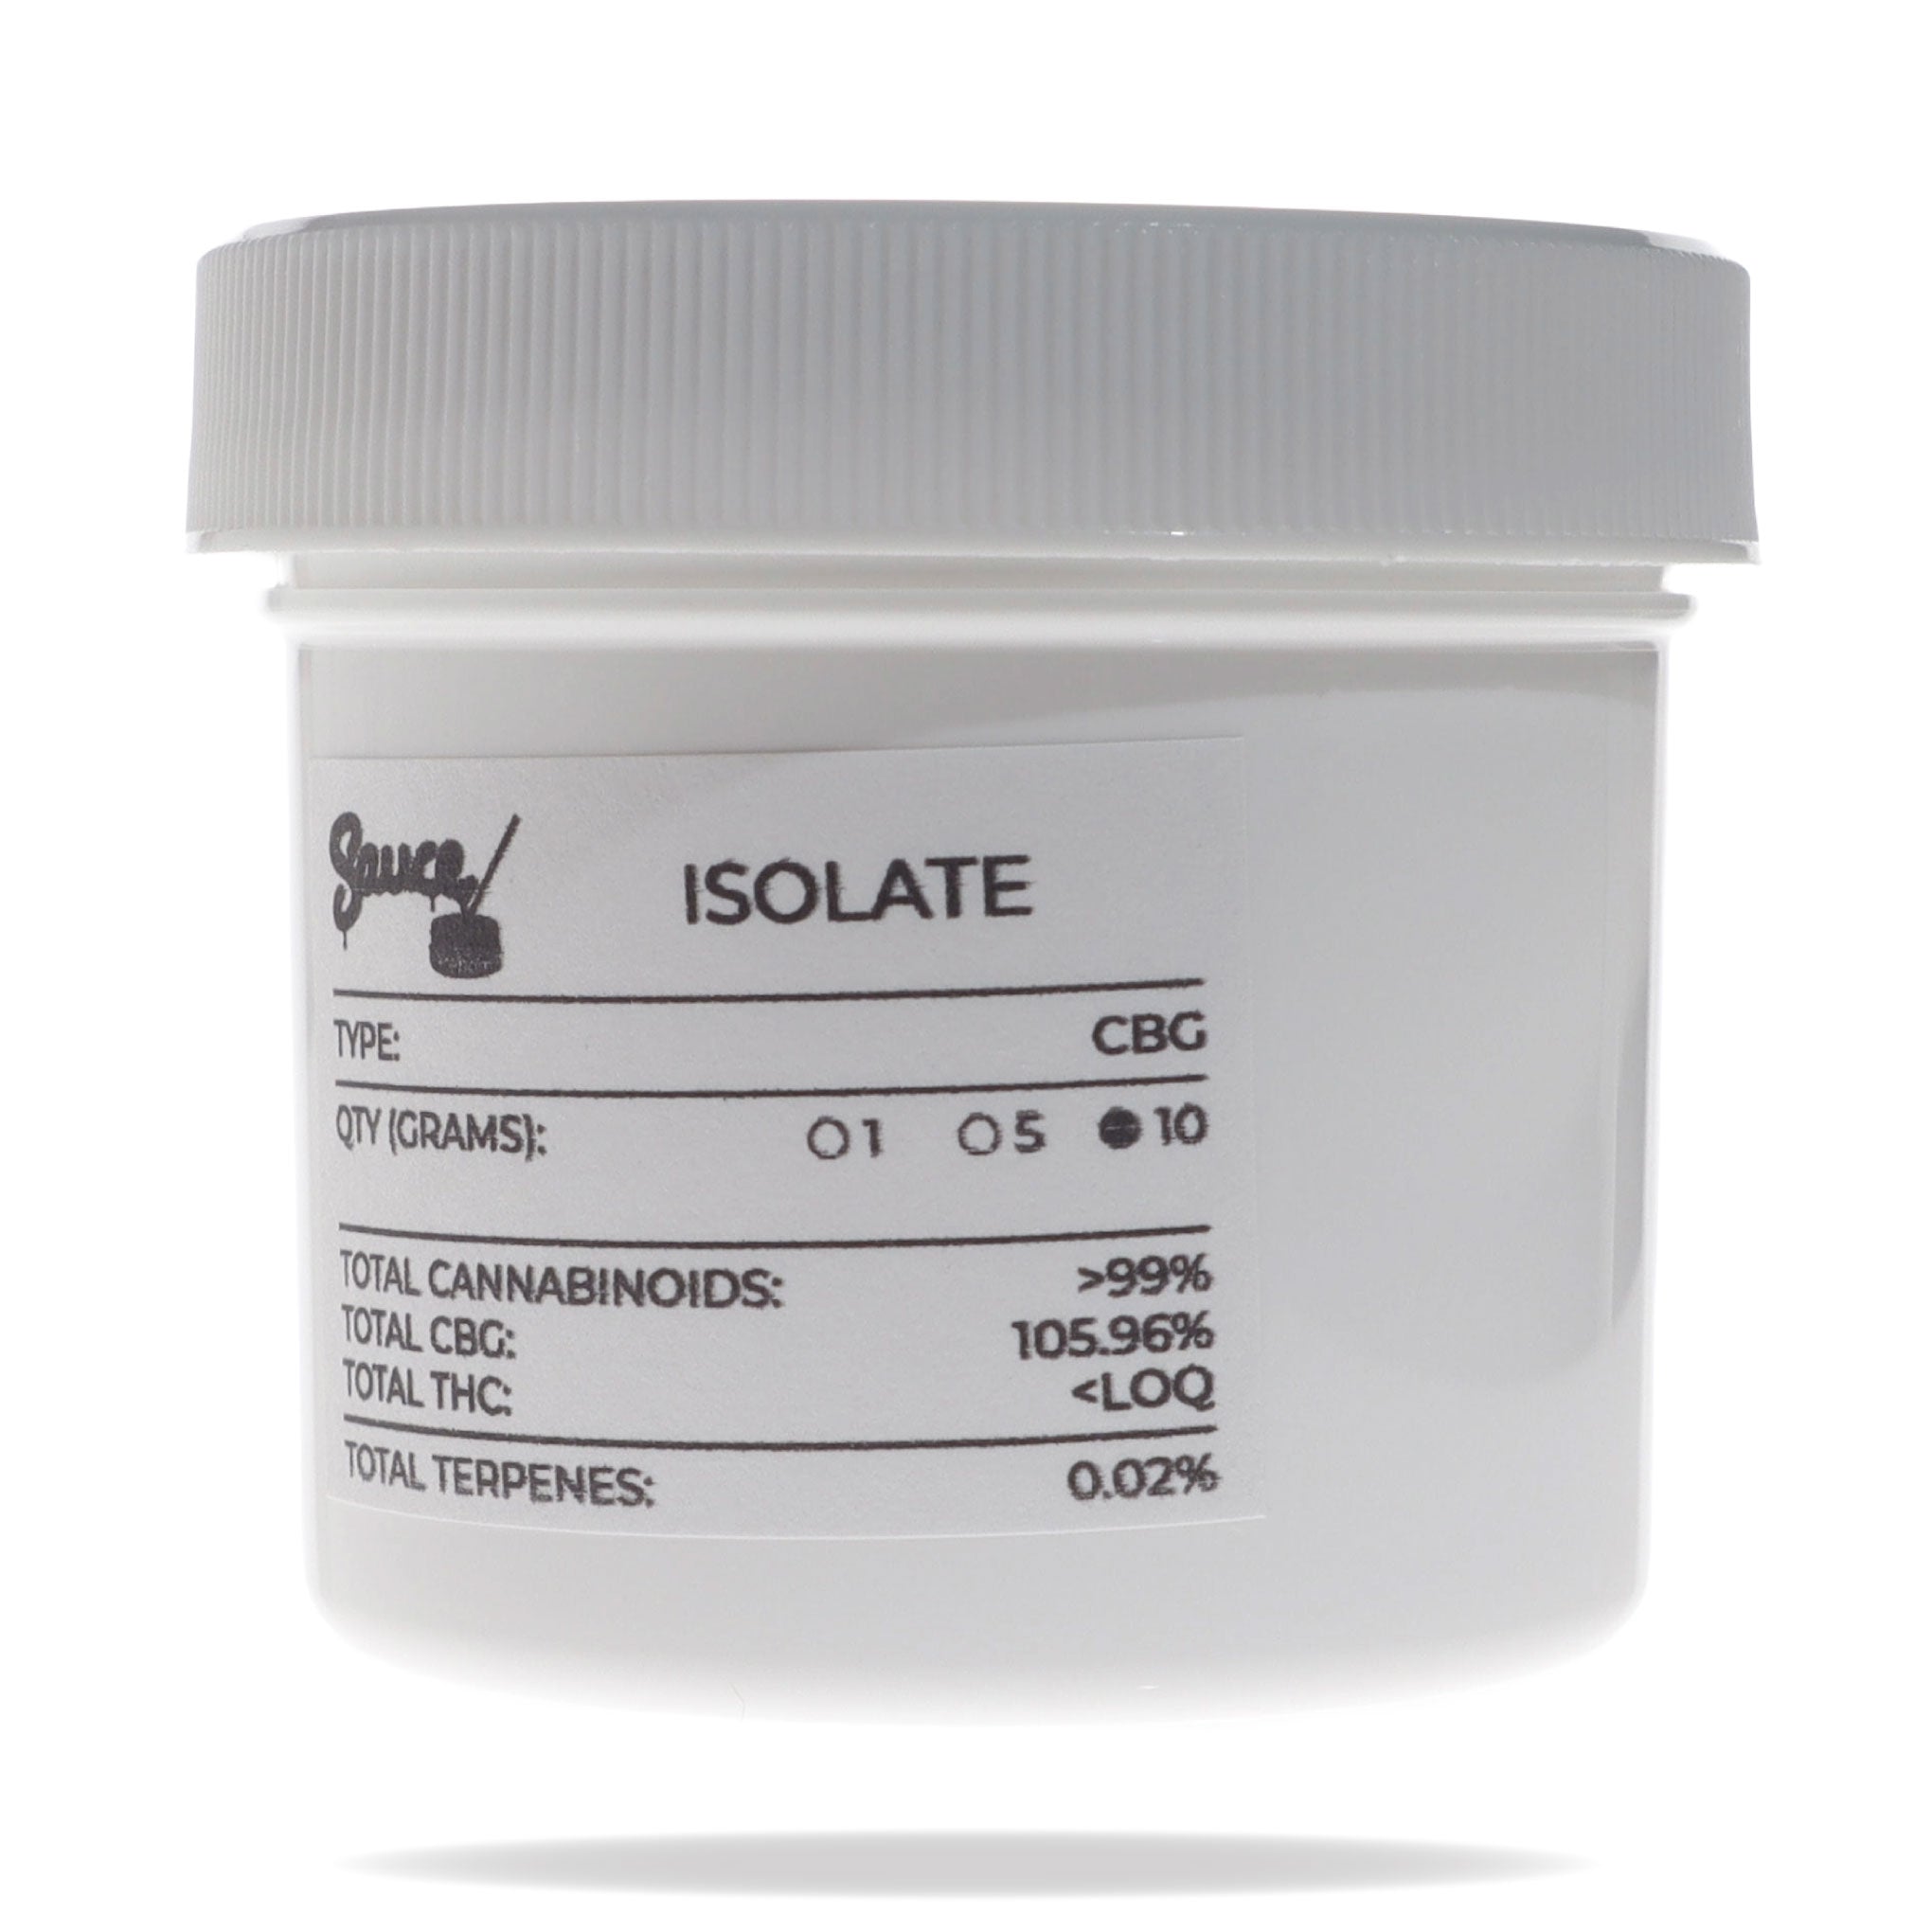 Image of CBG Isolate 10 gram jar.